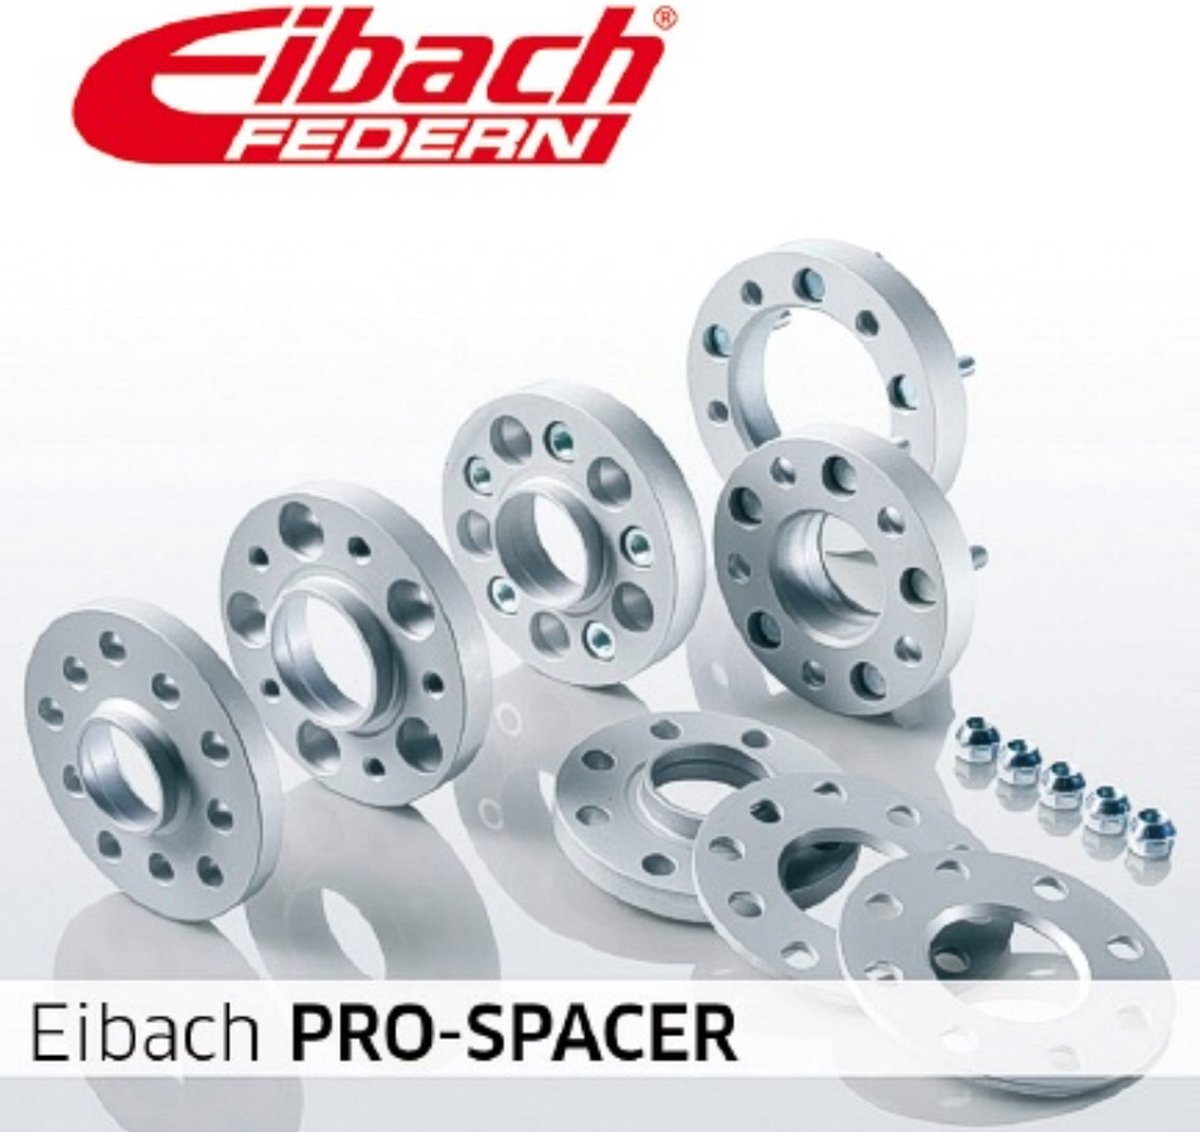 EIBACH - SPACER SET 15MM 112X5 - ZWART - VW GOLF 7 / SEAT LEON / AUDI A3 - S90-2-15-013-B